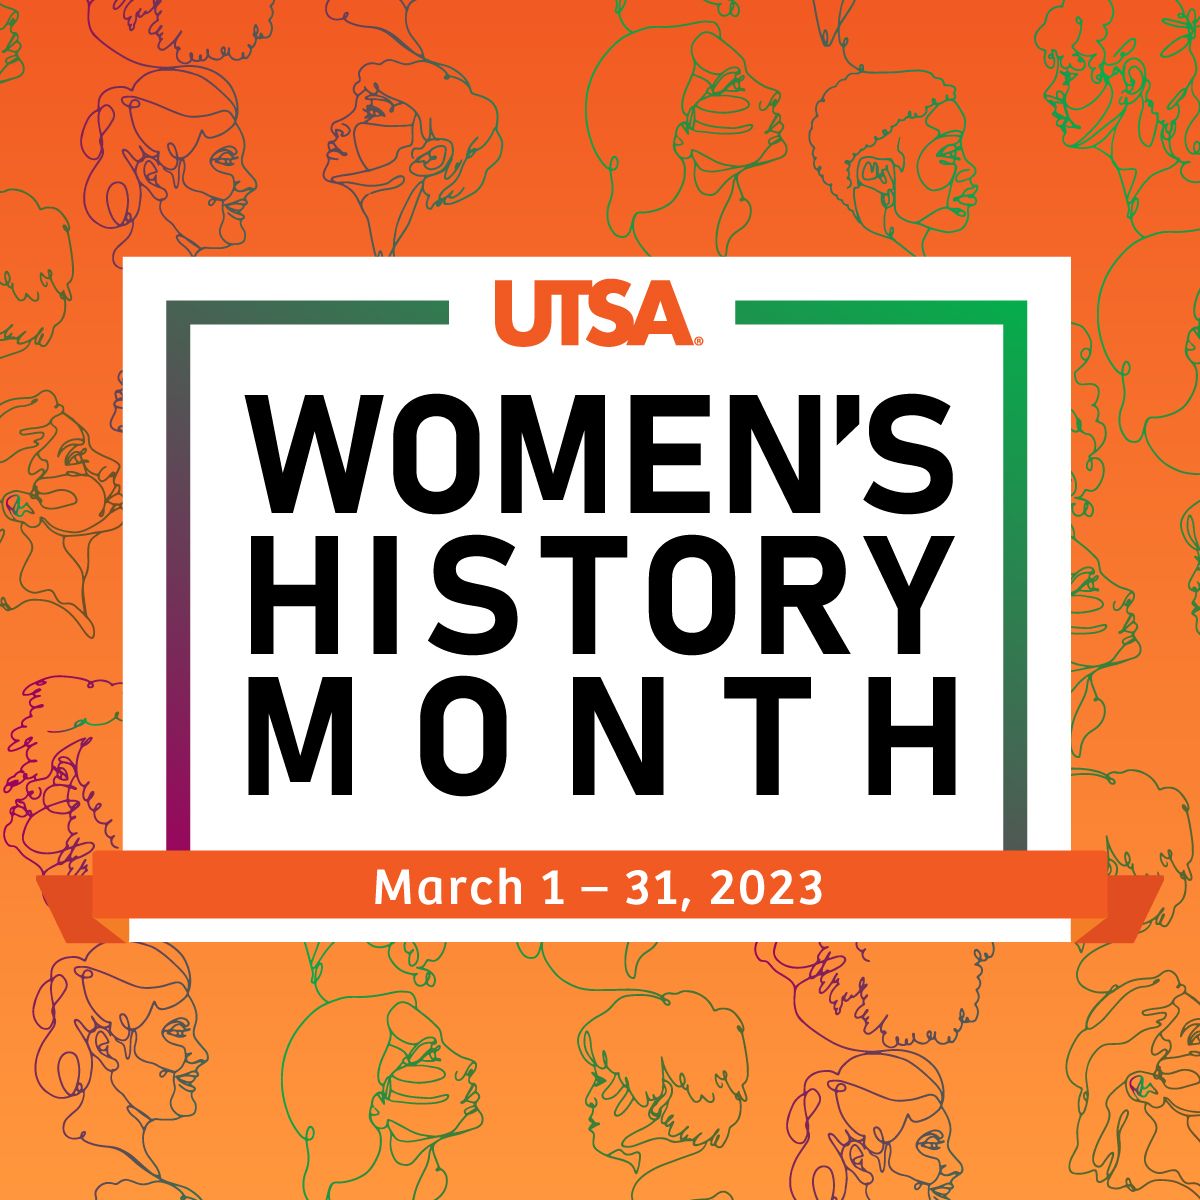 Women's History Month at UTSA